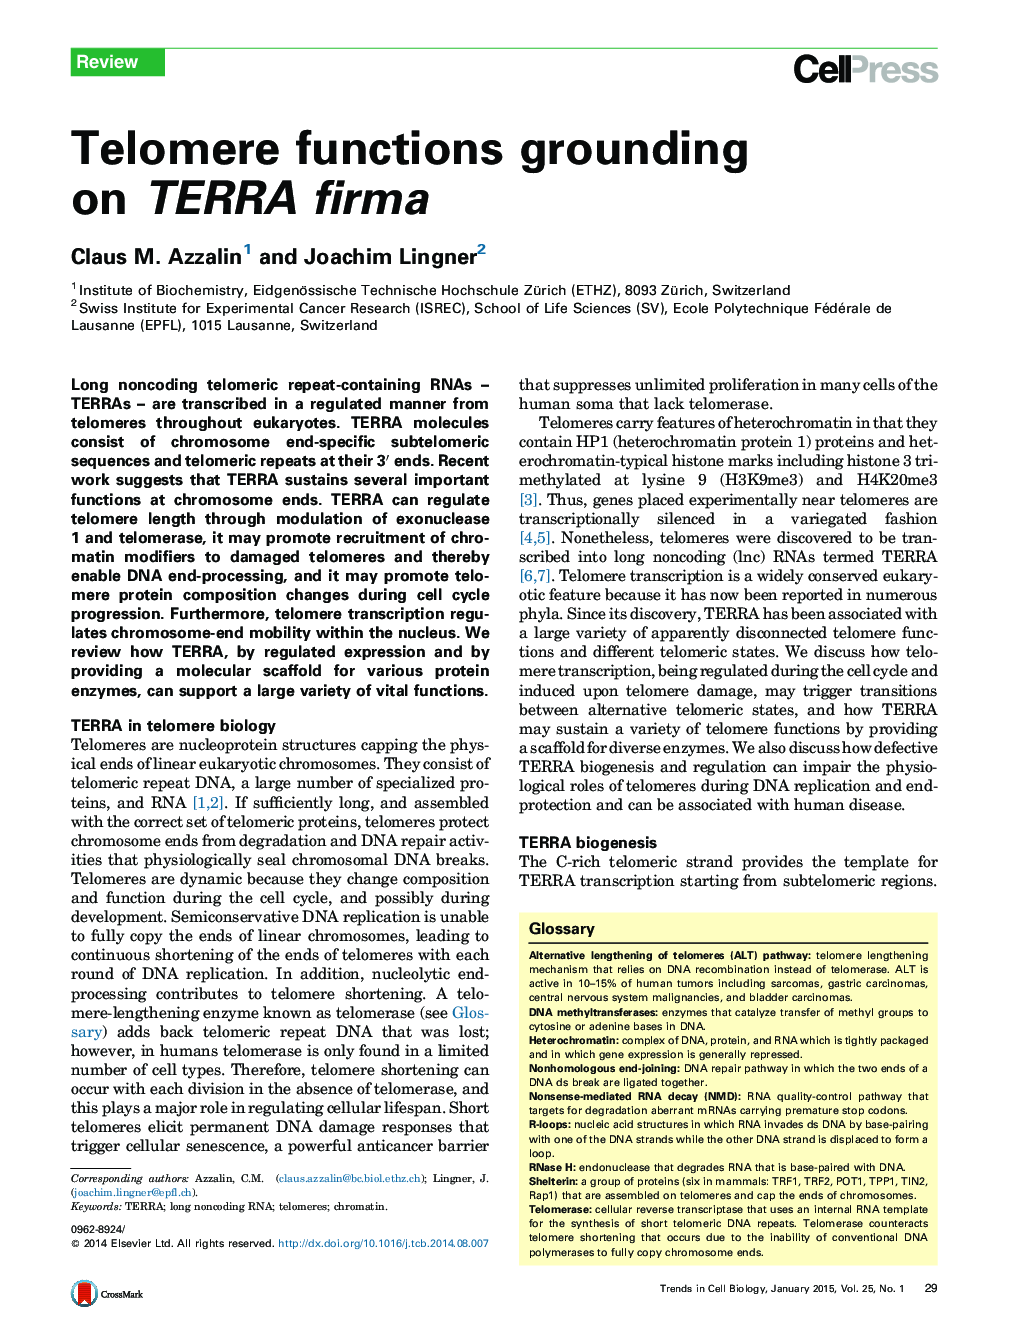 Telomere functions grounding on TERRA firma